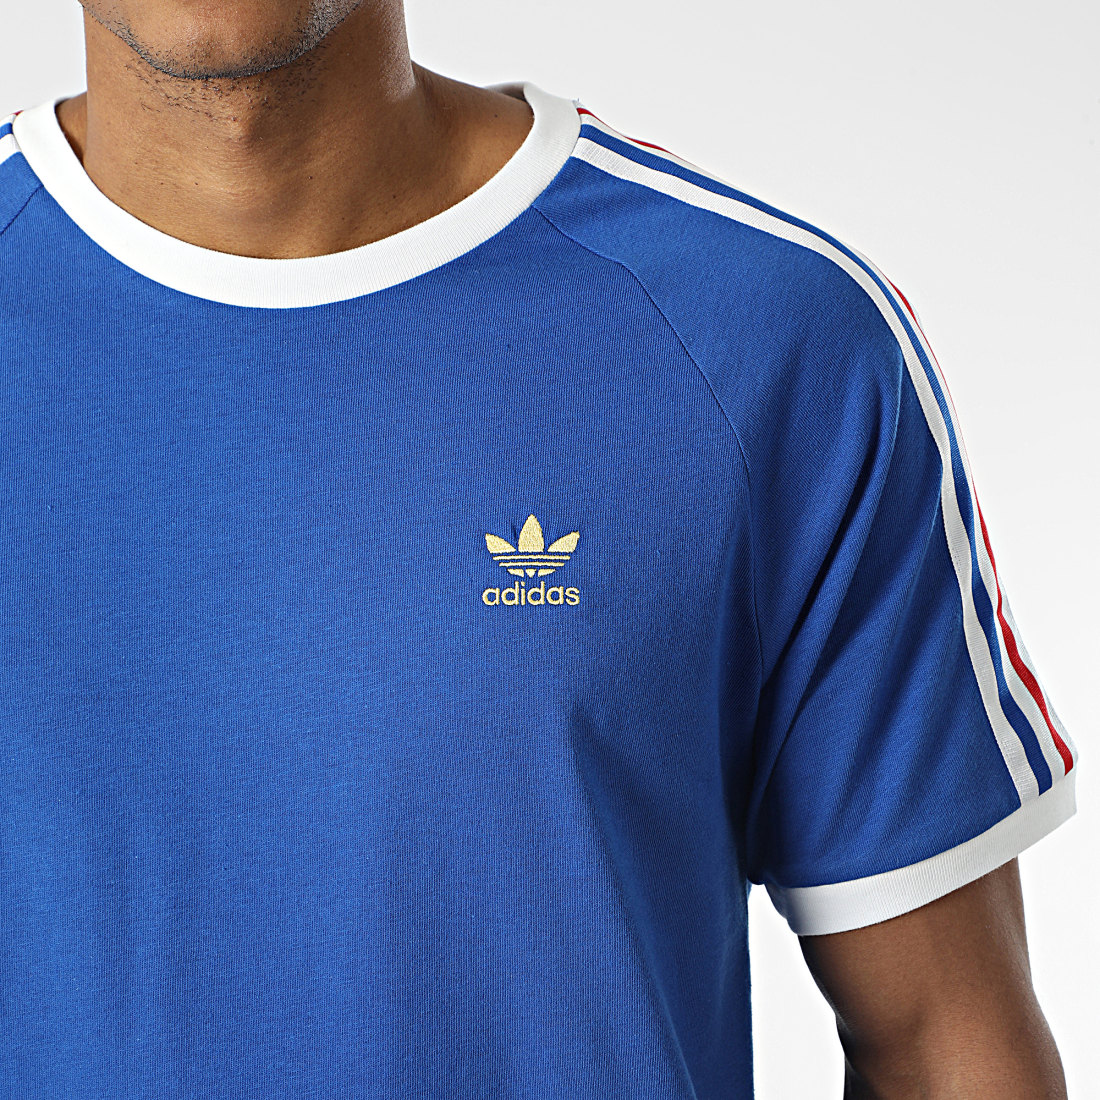 Adidas Originals - Tee Shirt A Nations HK7418 Bleu Roi Doré - LaBoutiqueOfficielle.com